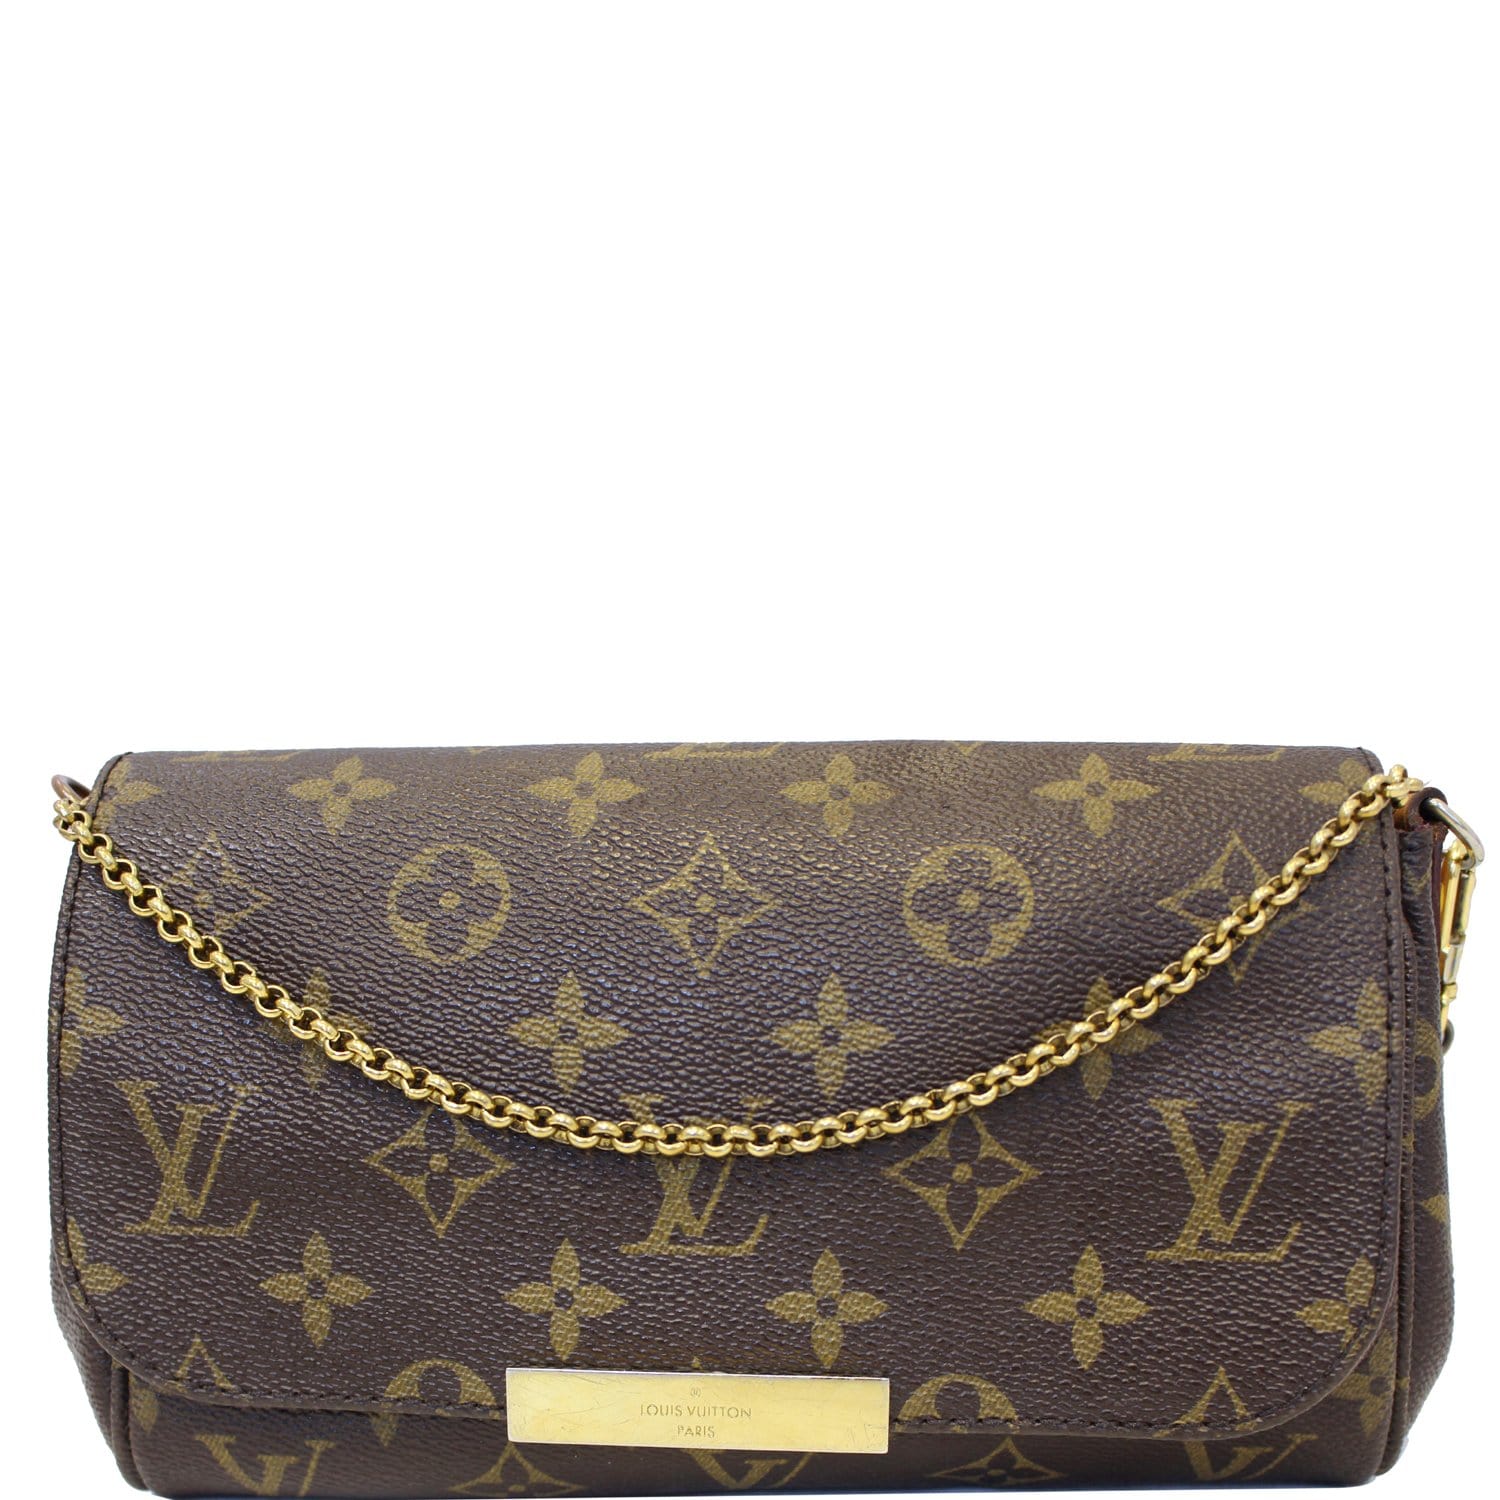 Whats in my favorite pm or mm  Louis vuitton Handbag essentials Lv  handbags